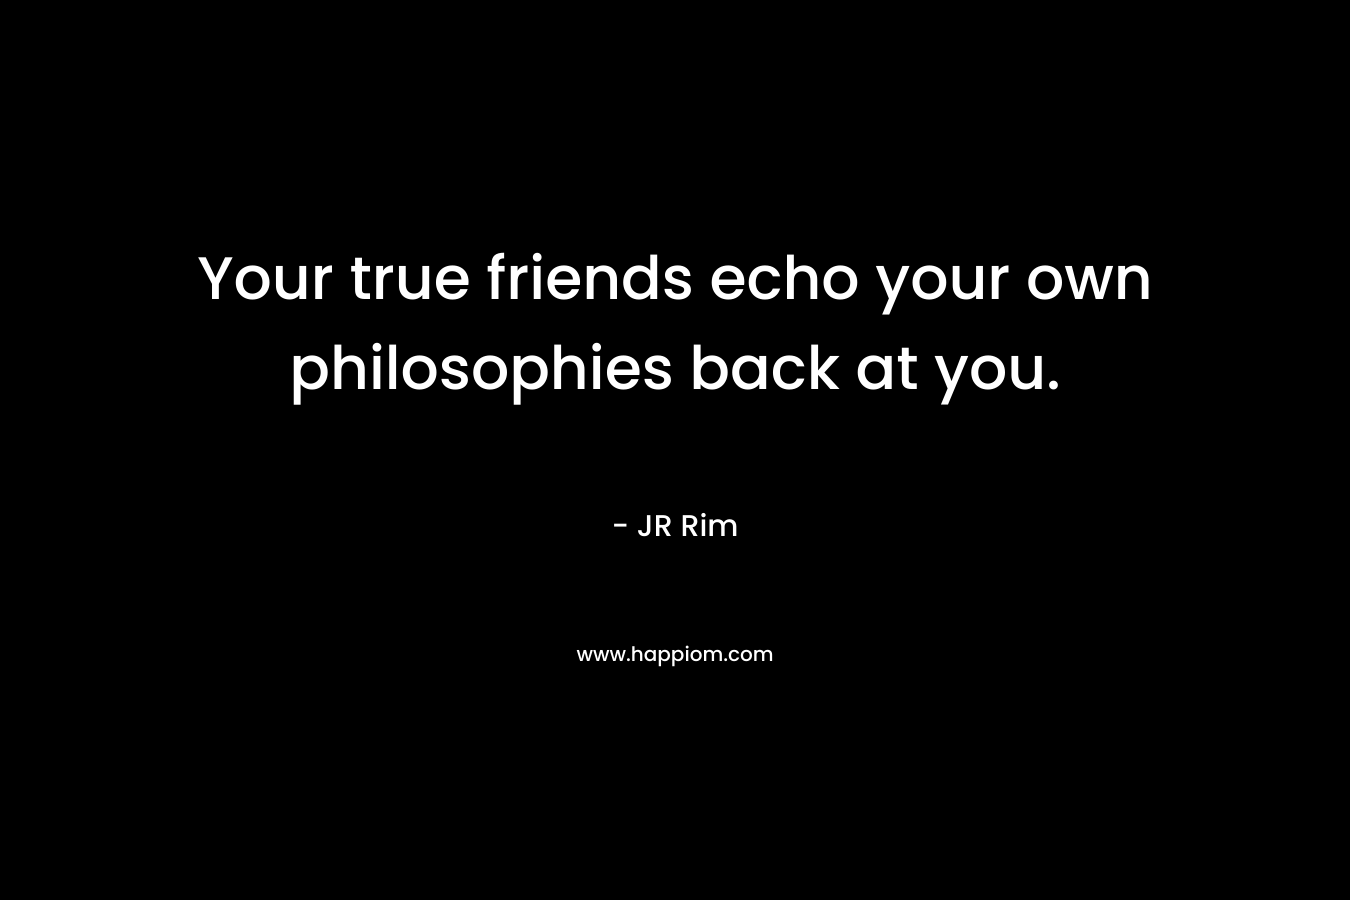 Your true friends echo your own philosophies back at you. – JR Rim